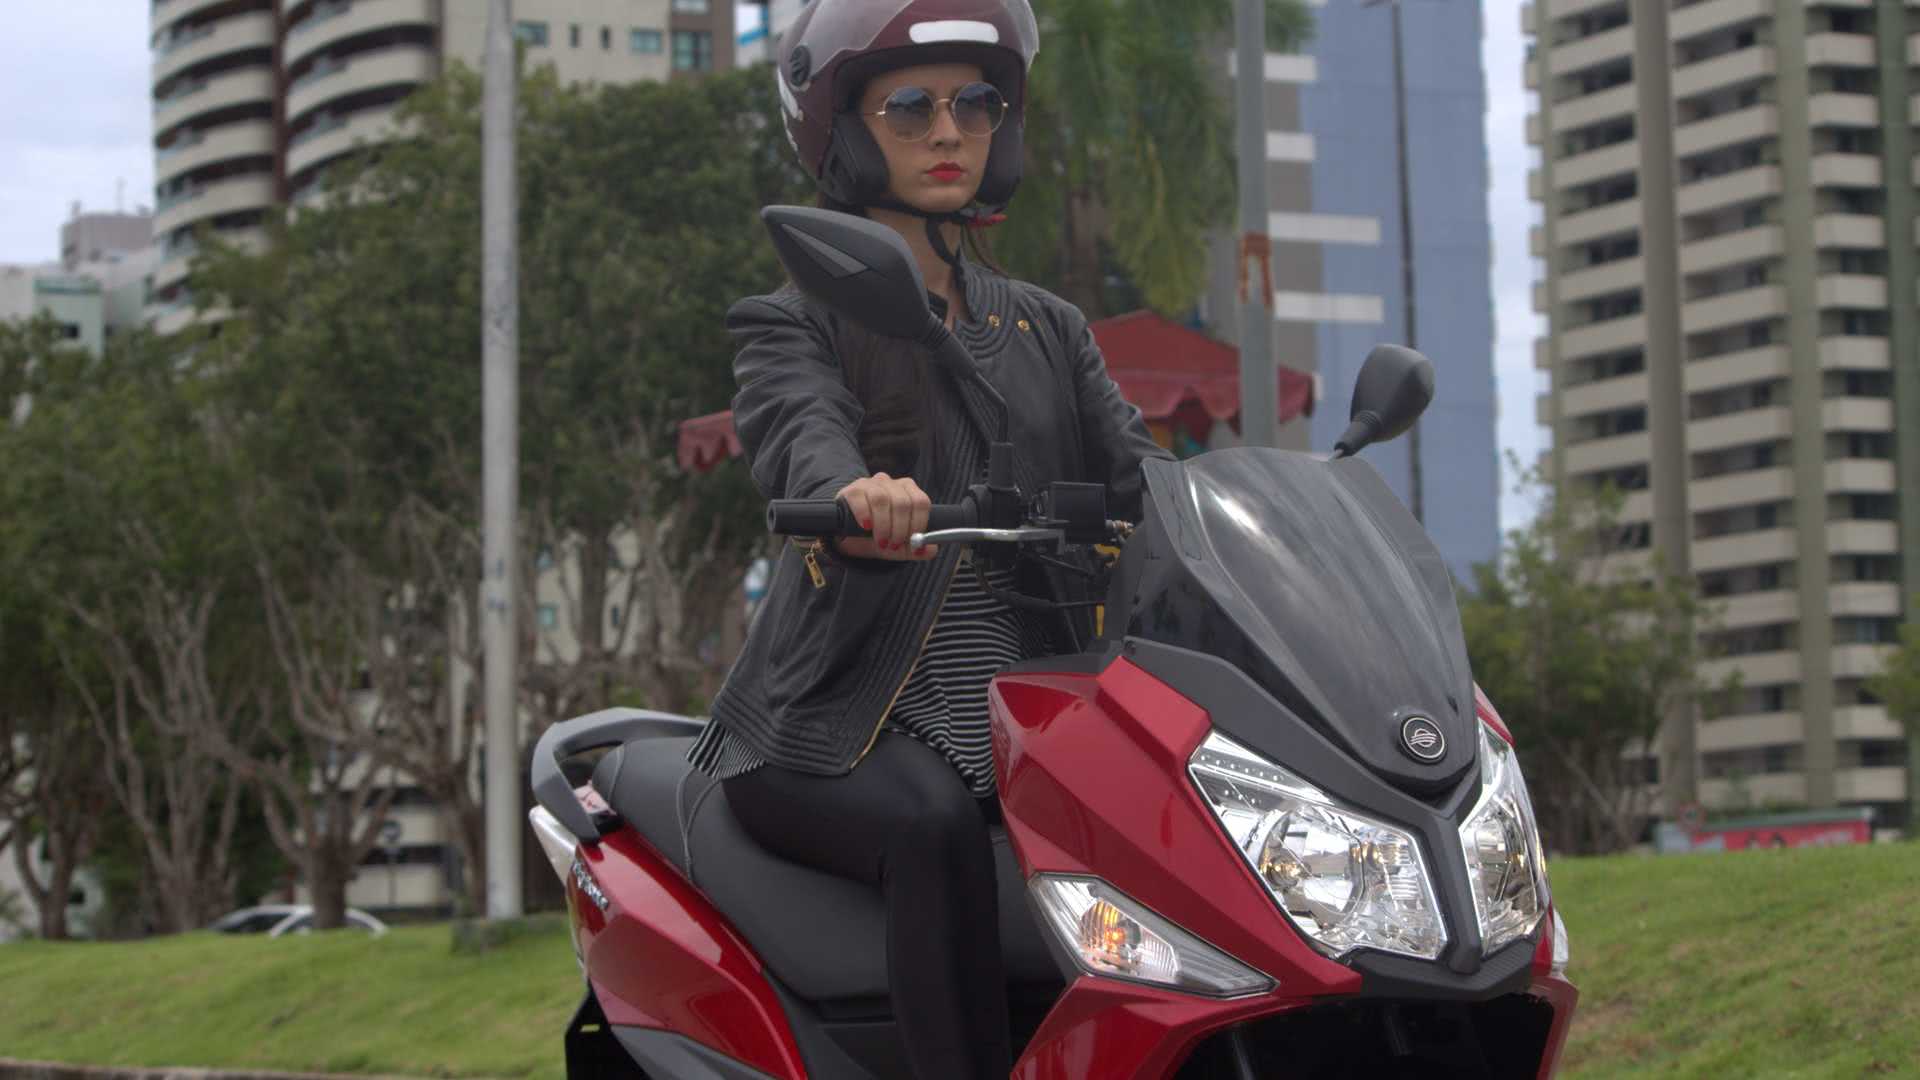 Nova scooter da Dafra